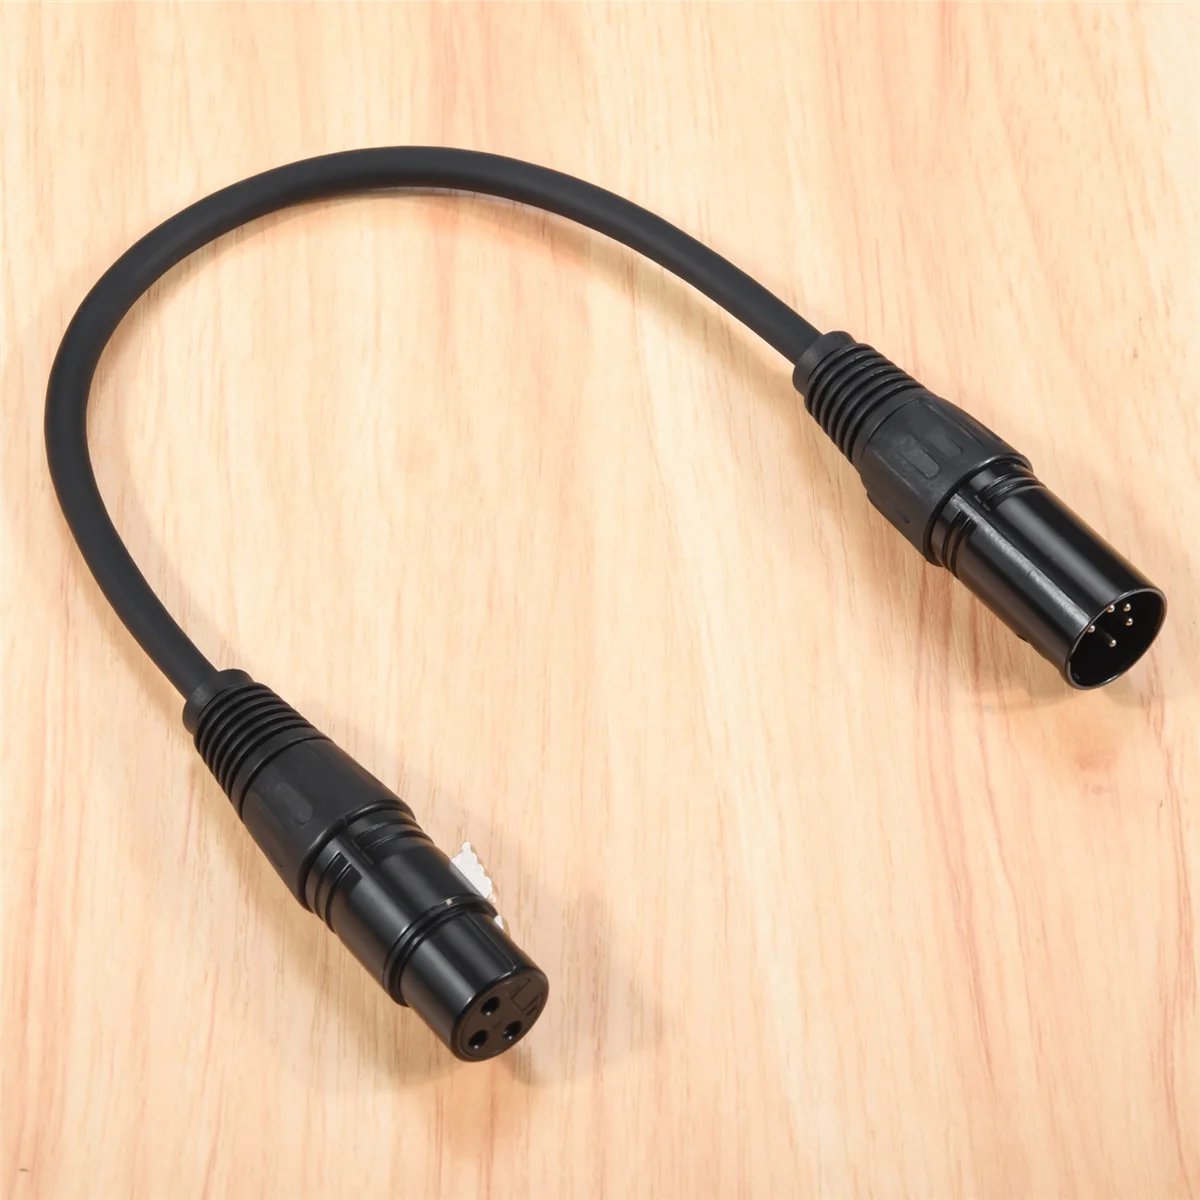 XLR 3 Kolík na XLR 5 Kolík a XLR 3 Kolík na XLR 5 Pin Audio Kábel, pre Mikrofón DMX Fáze Svetlo